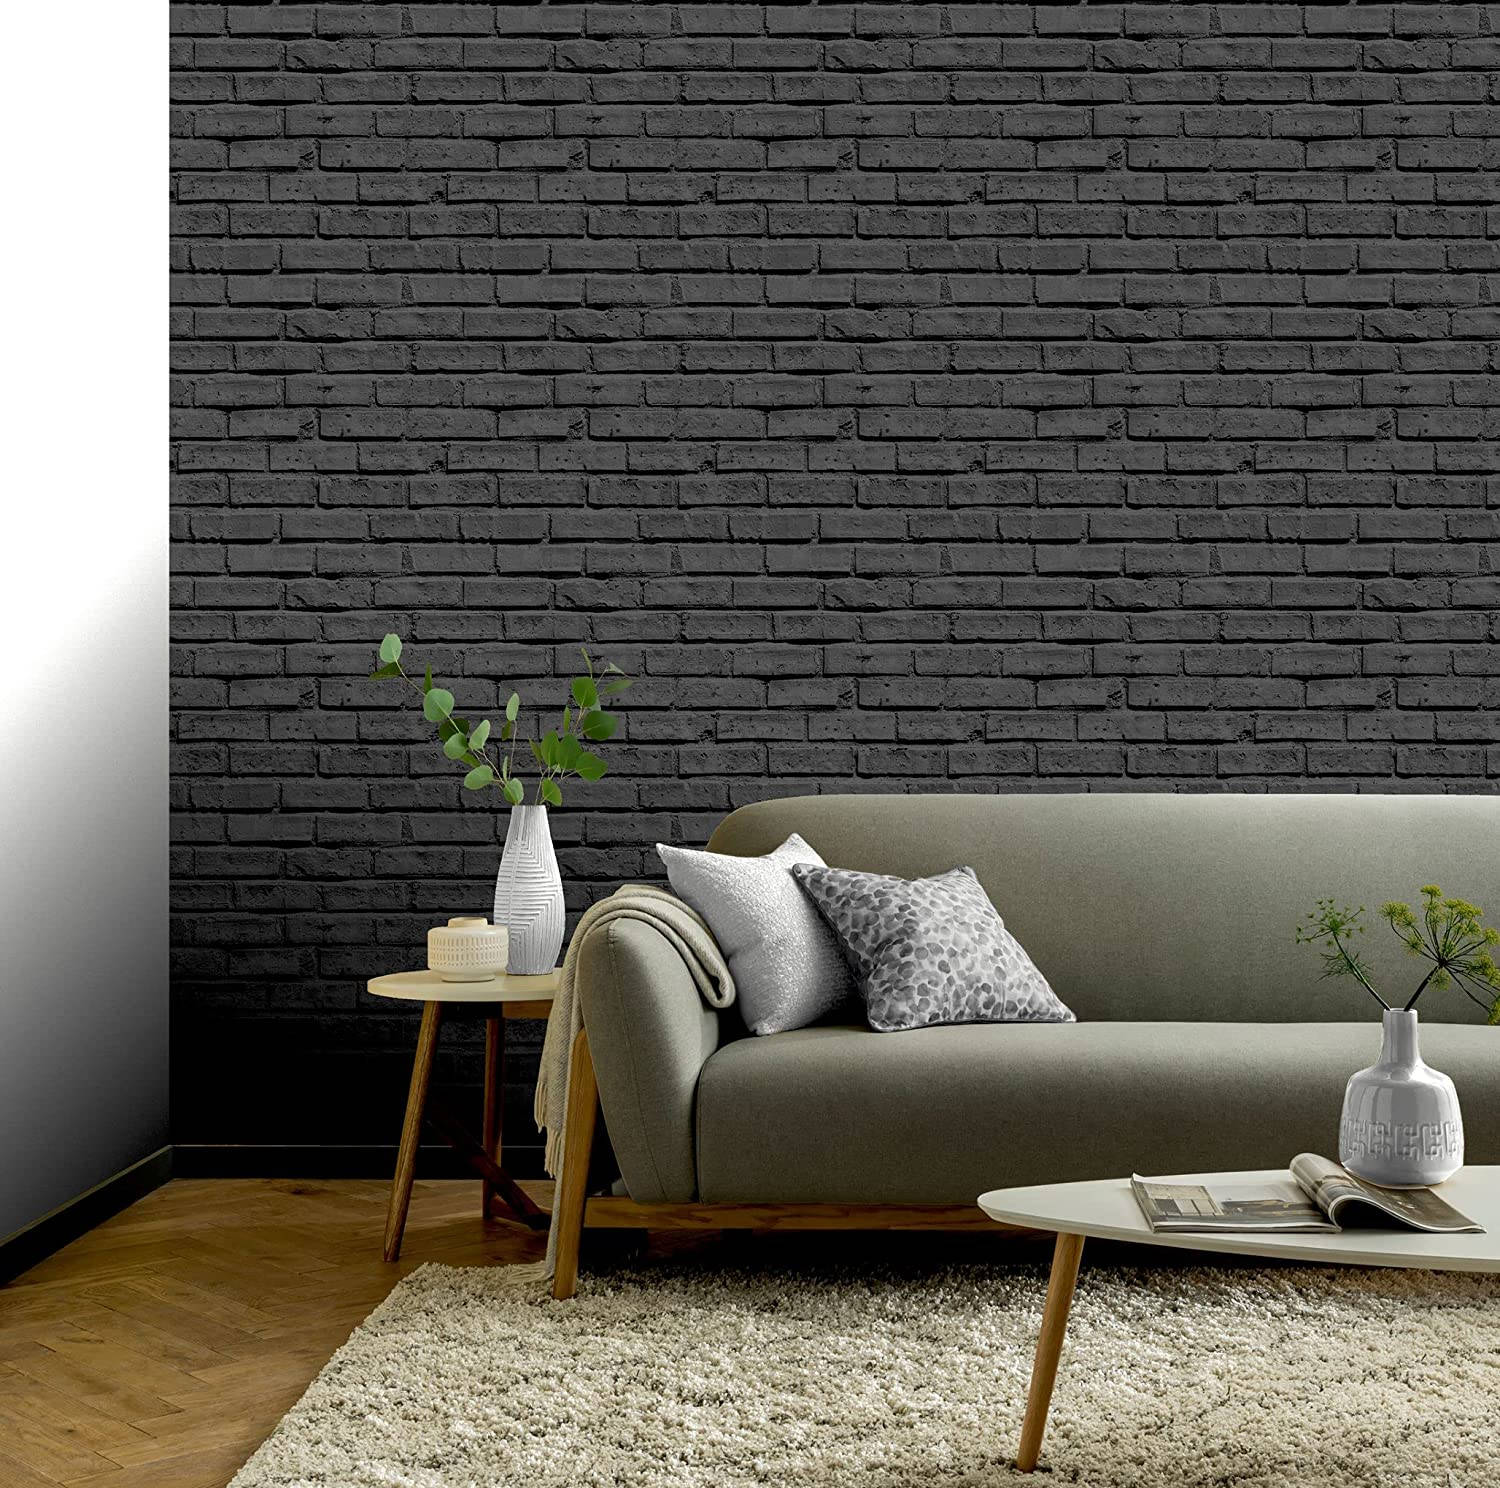 Free Black Brick Wallpaper Downloads, [100+] Black Brick Wallpapers for  FREE 